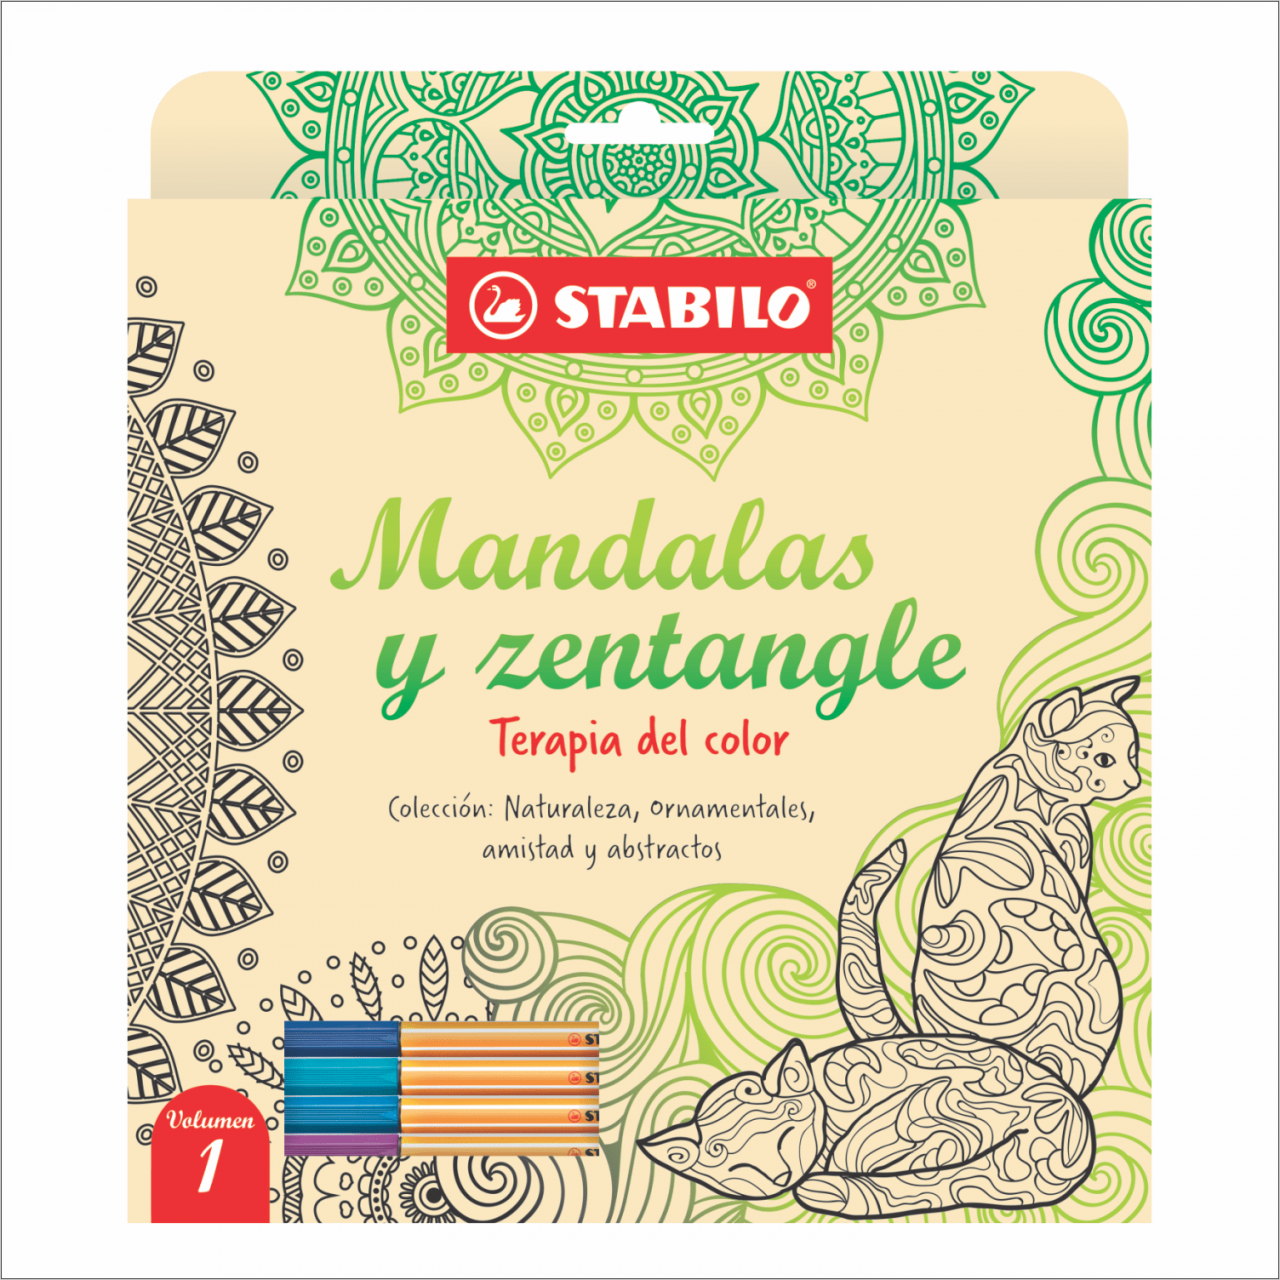 LIBRO DE MANDALAS Y ZENTANGLE STABILO VOLUMEN 1 + 5 FINE PEN STABILO POINT 88